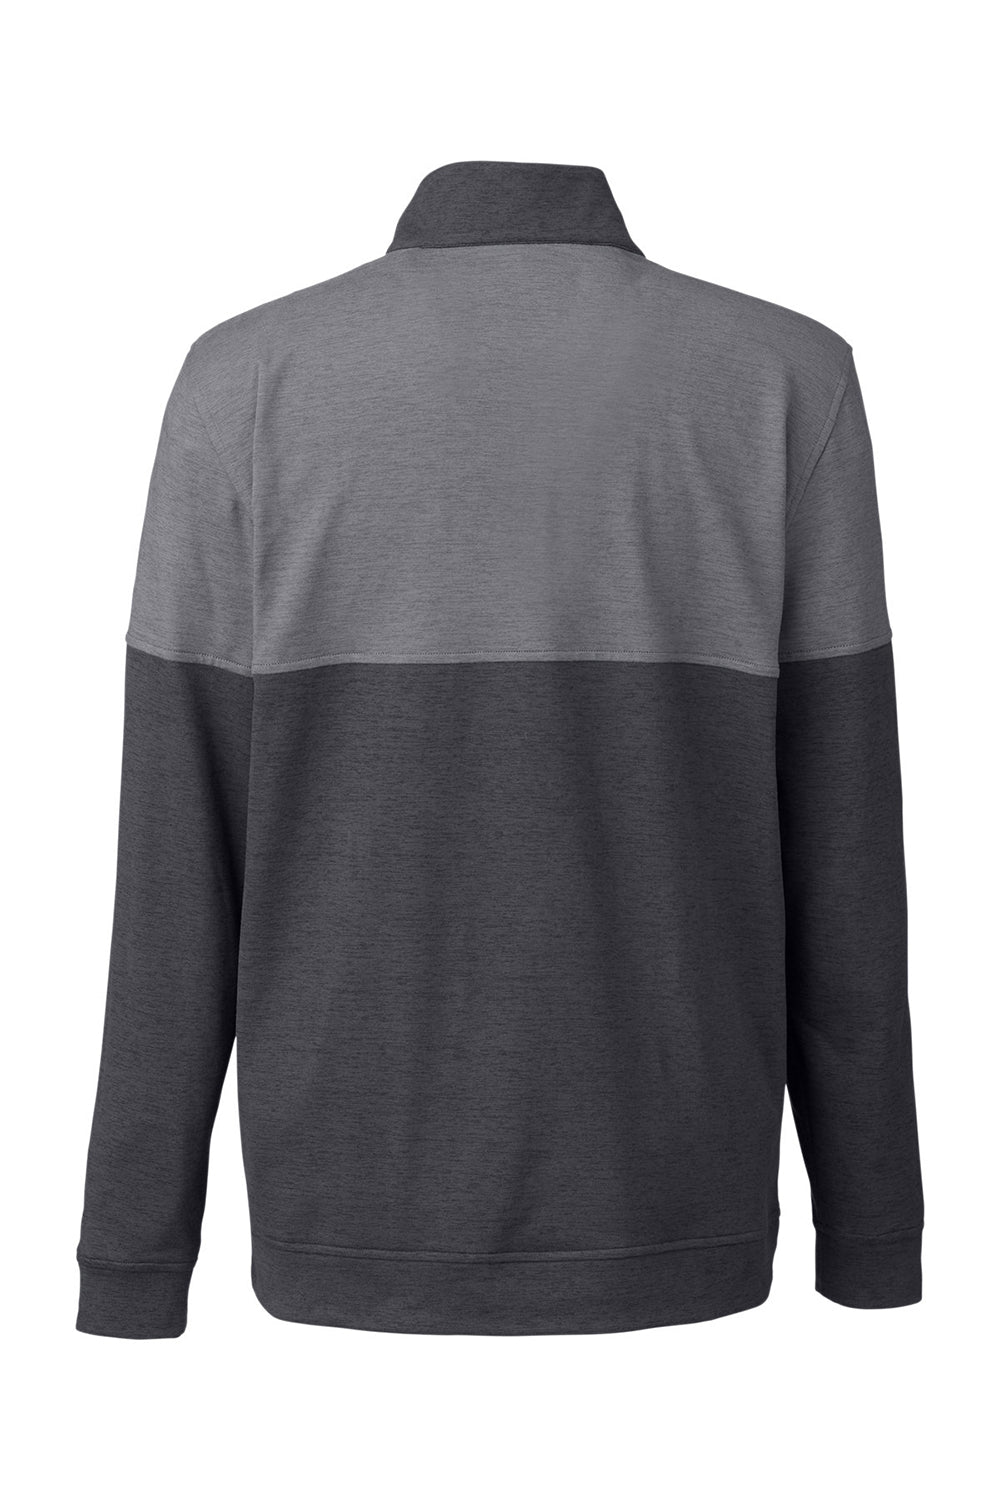 Puma 595803 Mens Cloudspun Warm Up 1/4 Zip Sweatshirt Black/Quiet Shade Grey Flat Back